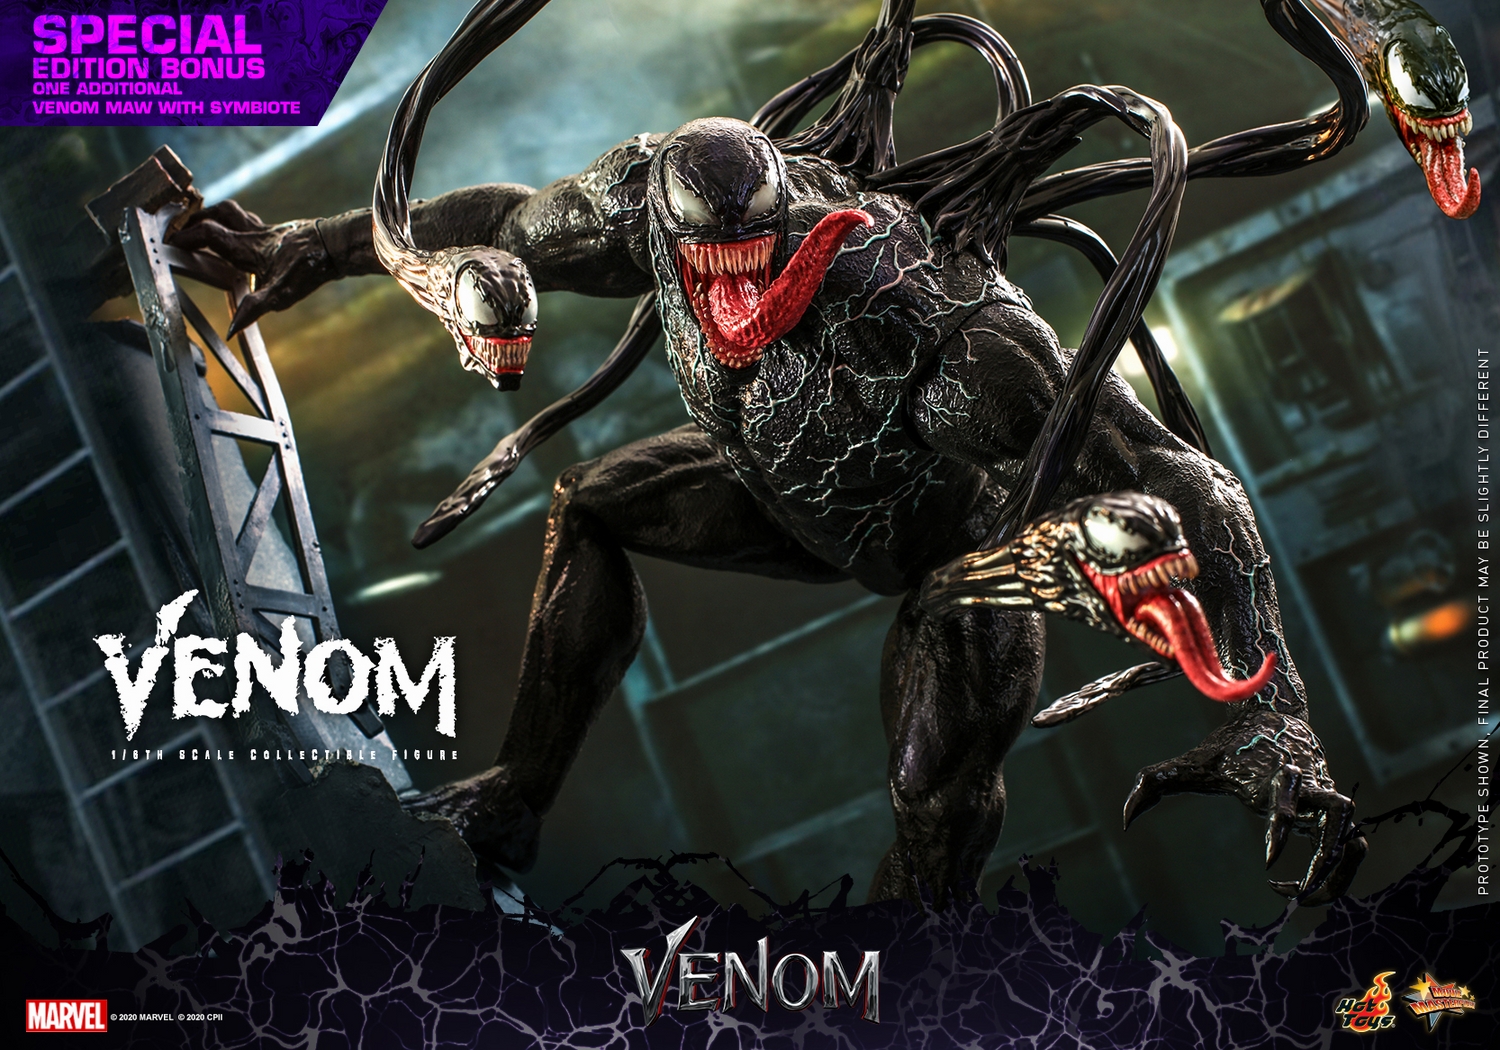 Hot Toys - Venom - Venom Collectible Figure_PR16 (Special).jpg